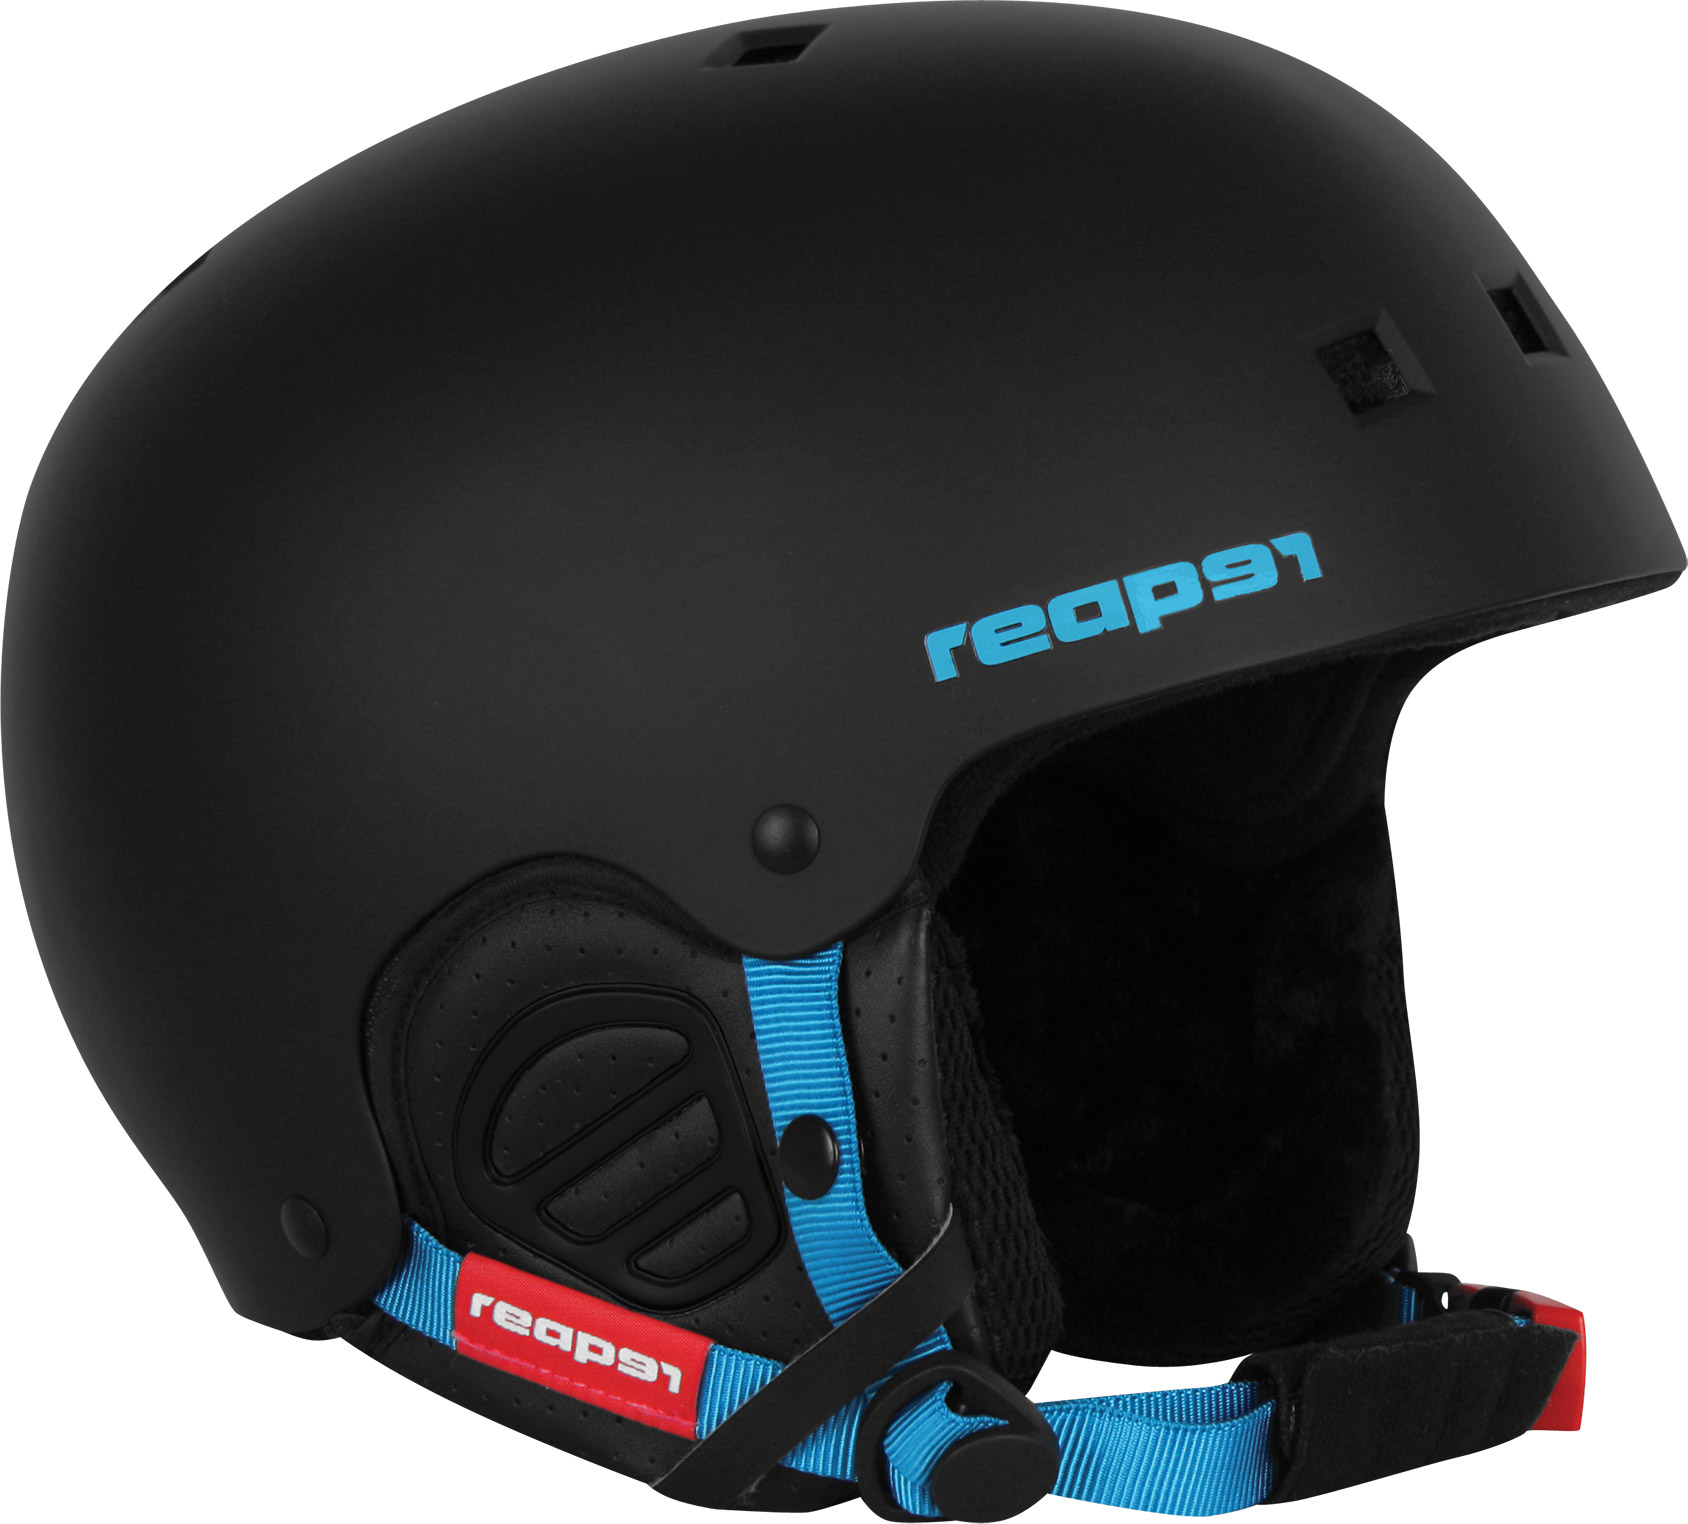 Men’s freestyle snowboard helmet